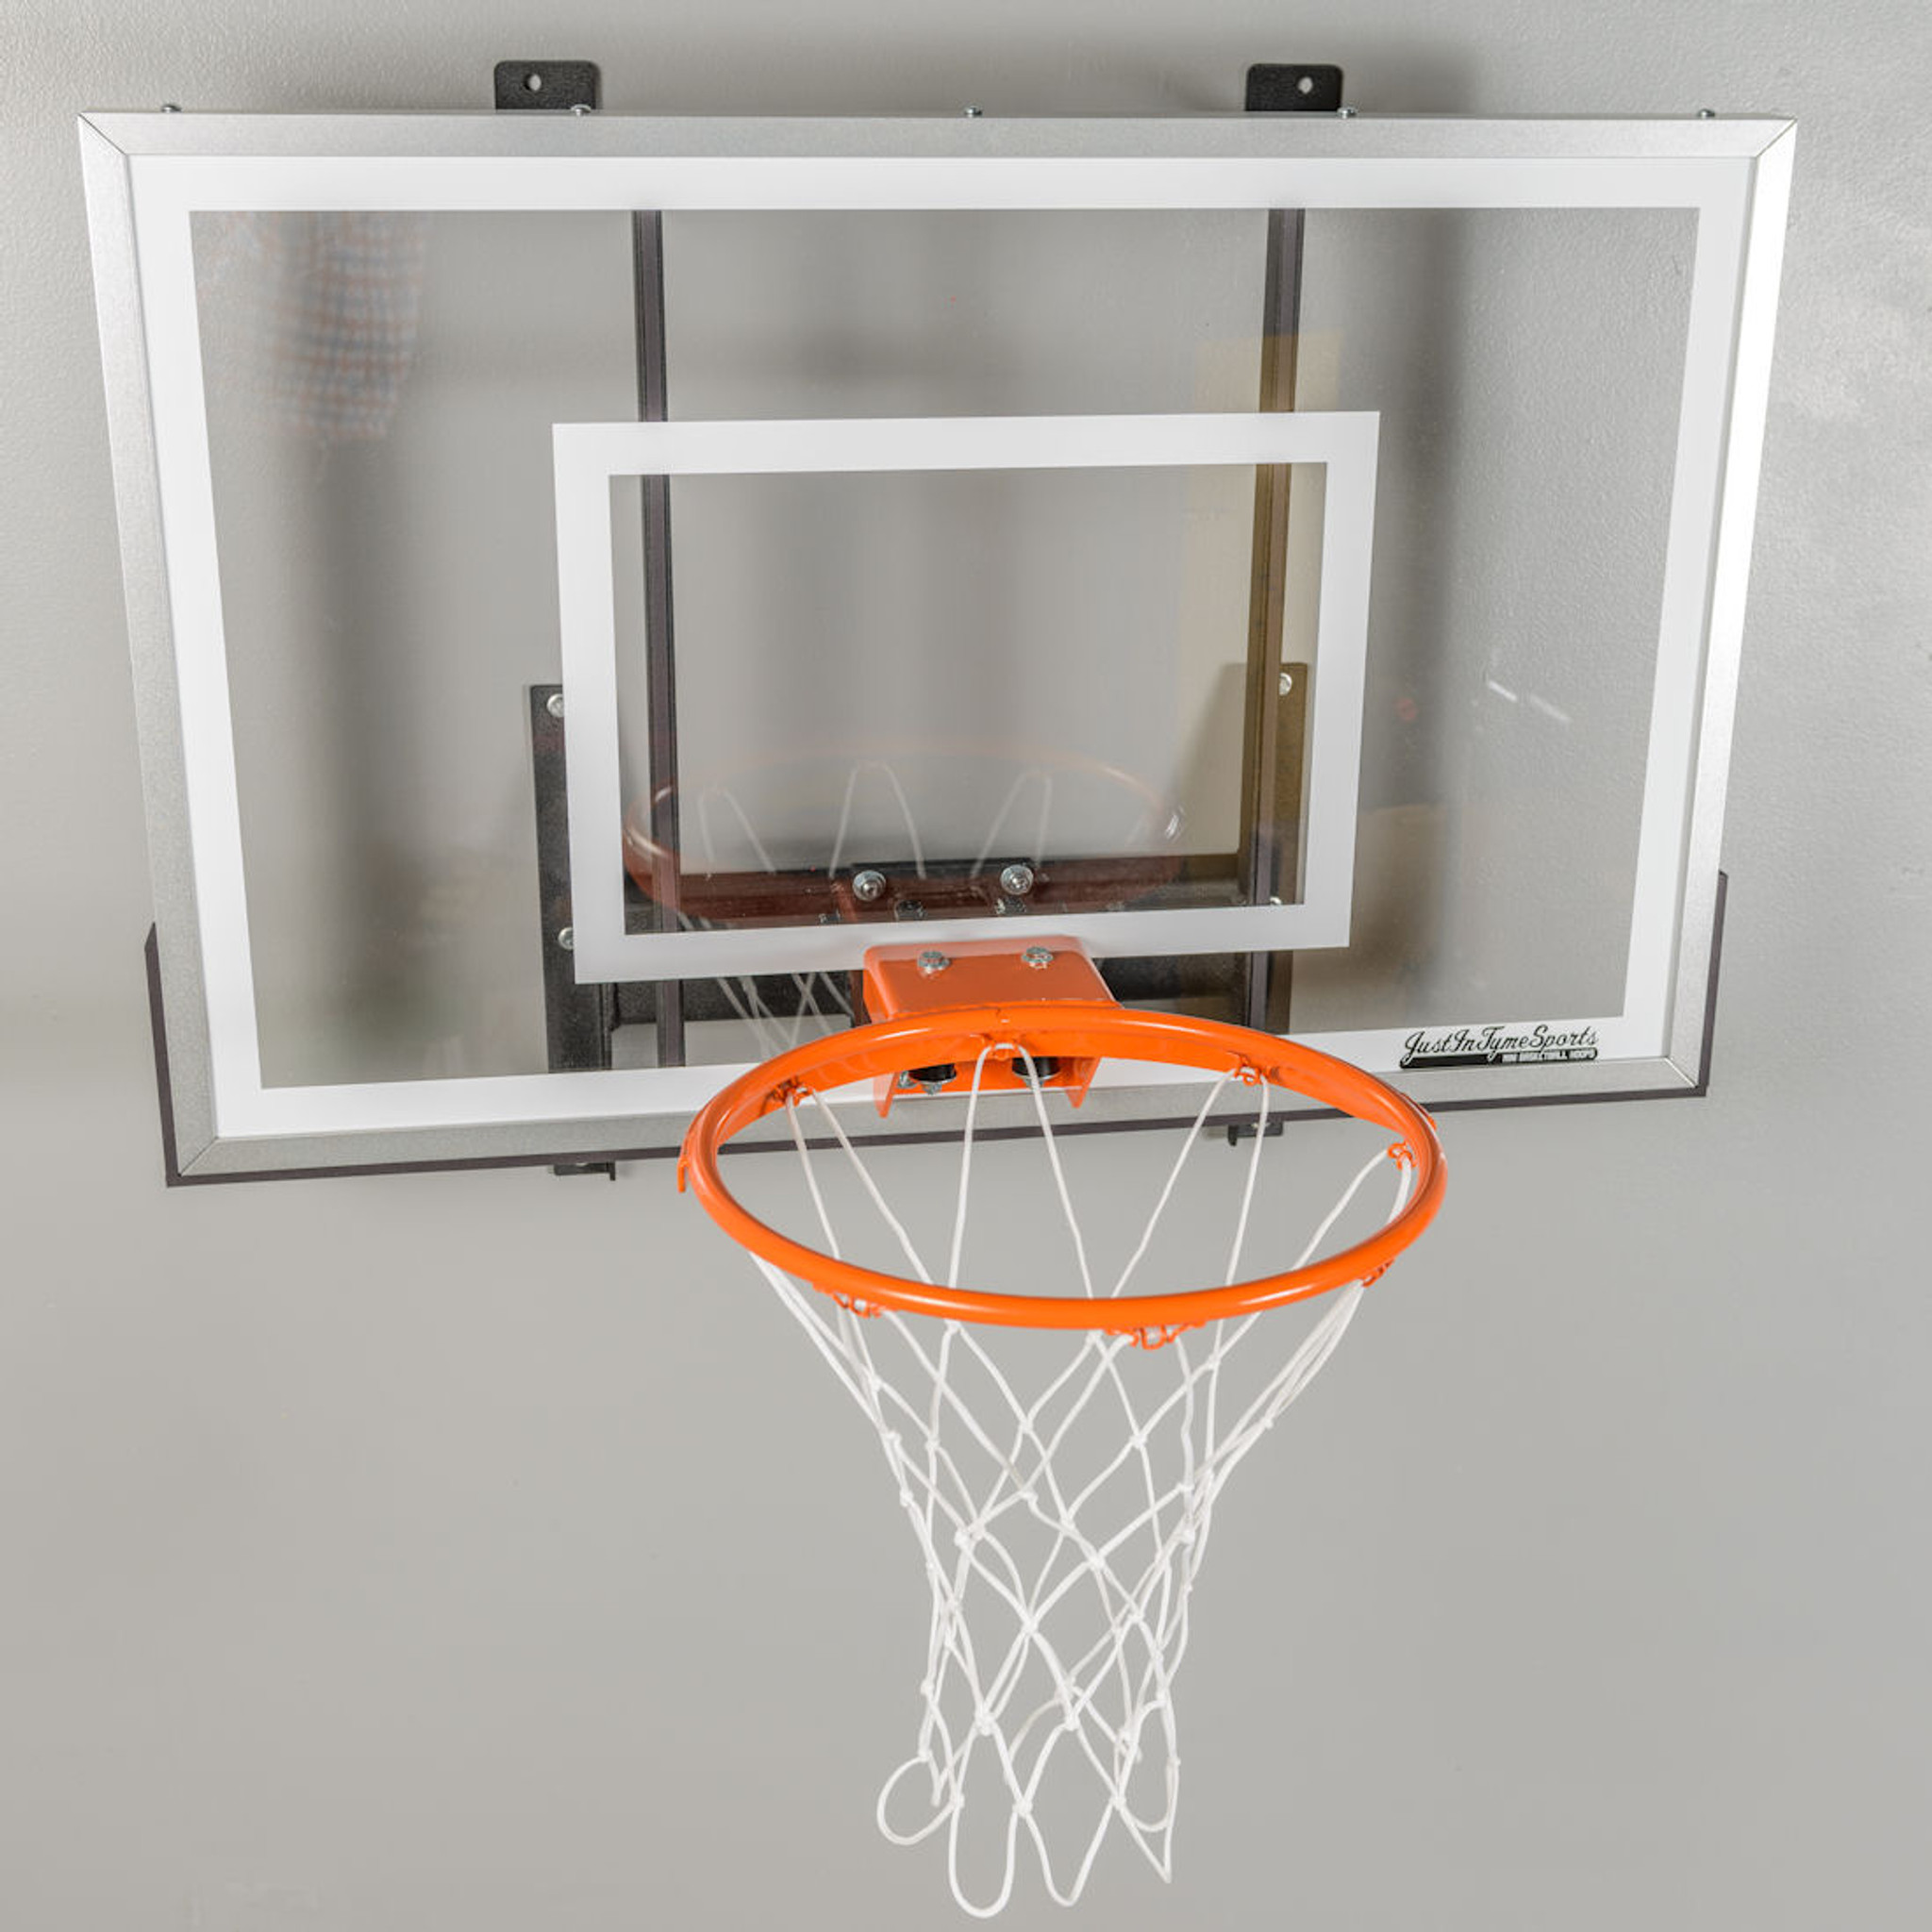 Shoot Again Indoor Basketball Hoop Set  Basketball bedroom, Basketball  room, Indoor basketball hoop